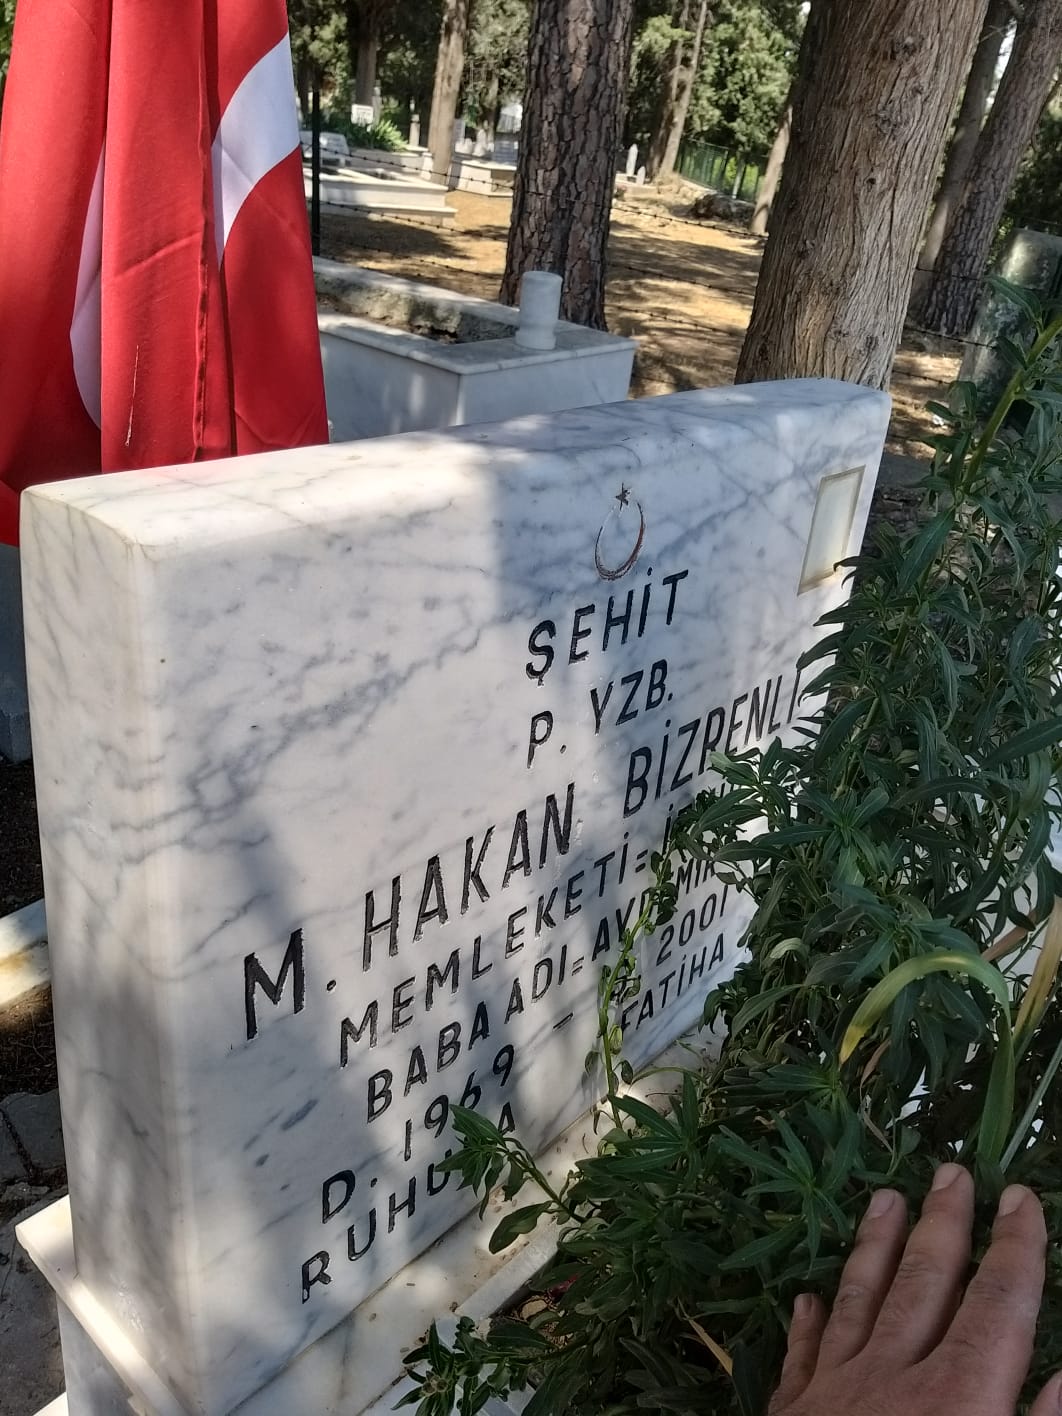 310 Şht.P.Yzb. Mustafa Hakan BİZRENLİ Anma Töreni (16.05.2022)